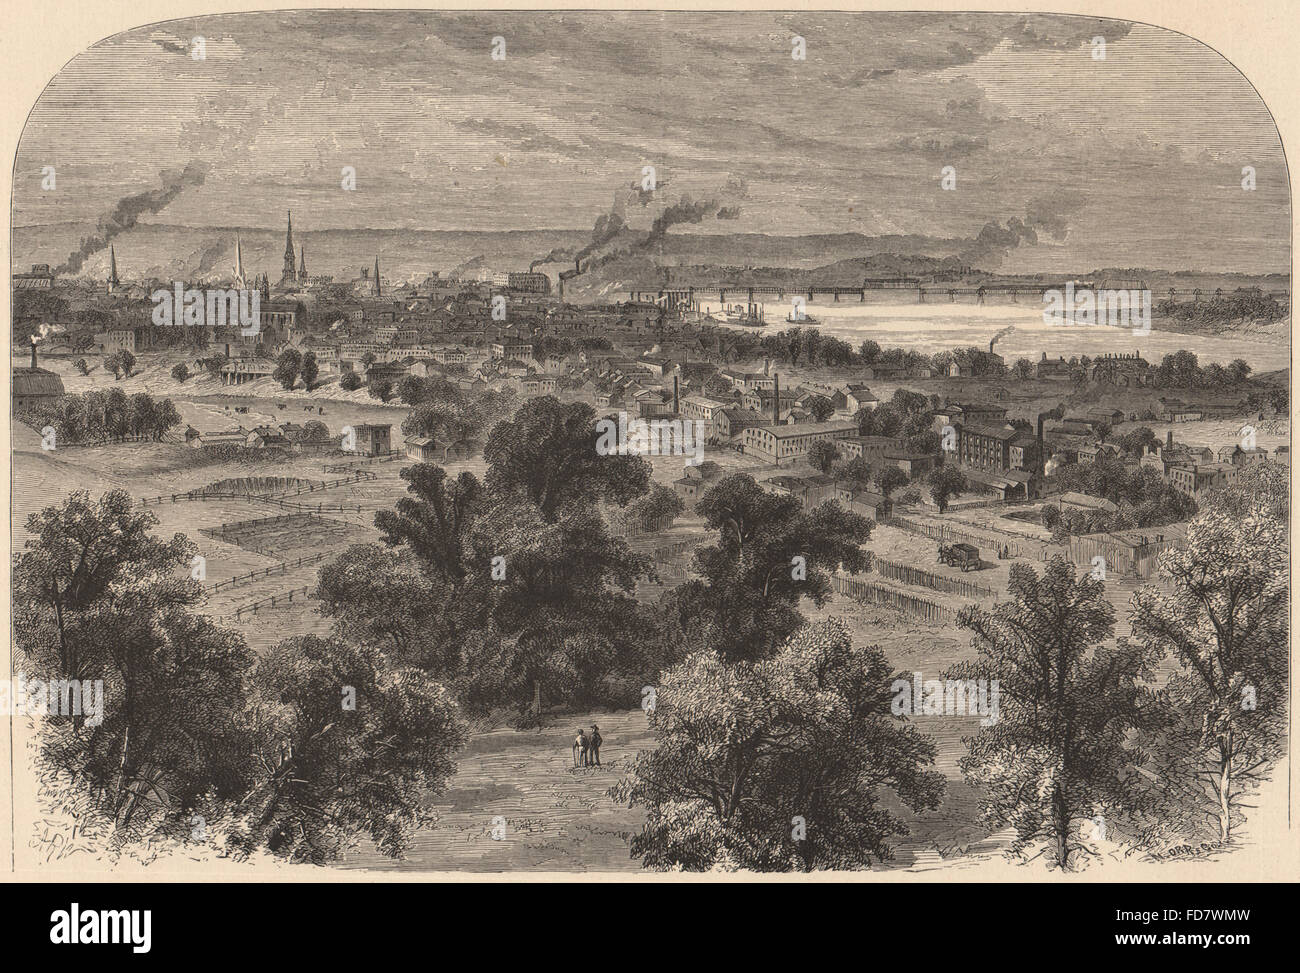 LOUISVILLE: View from the blind Asylum. Kentucky, antique print 1874 Stock Photo